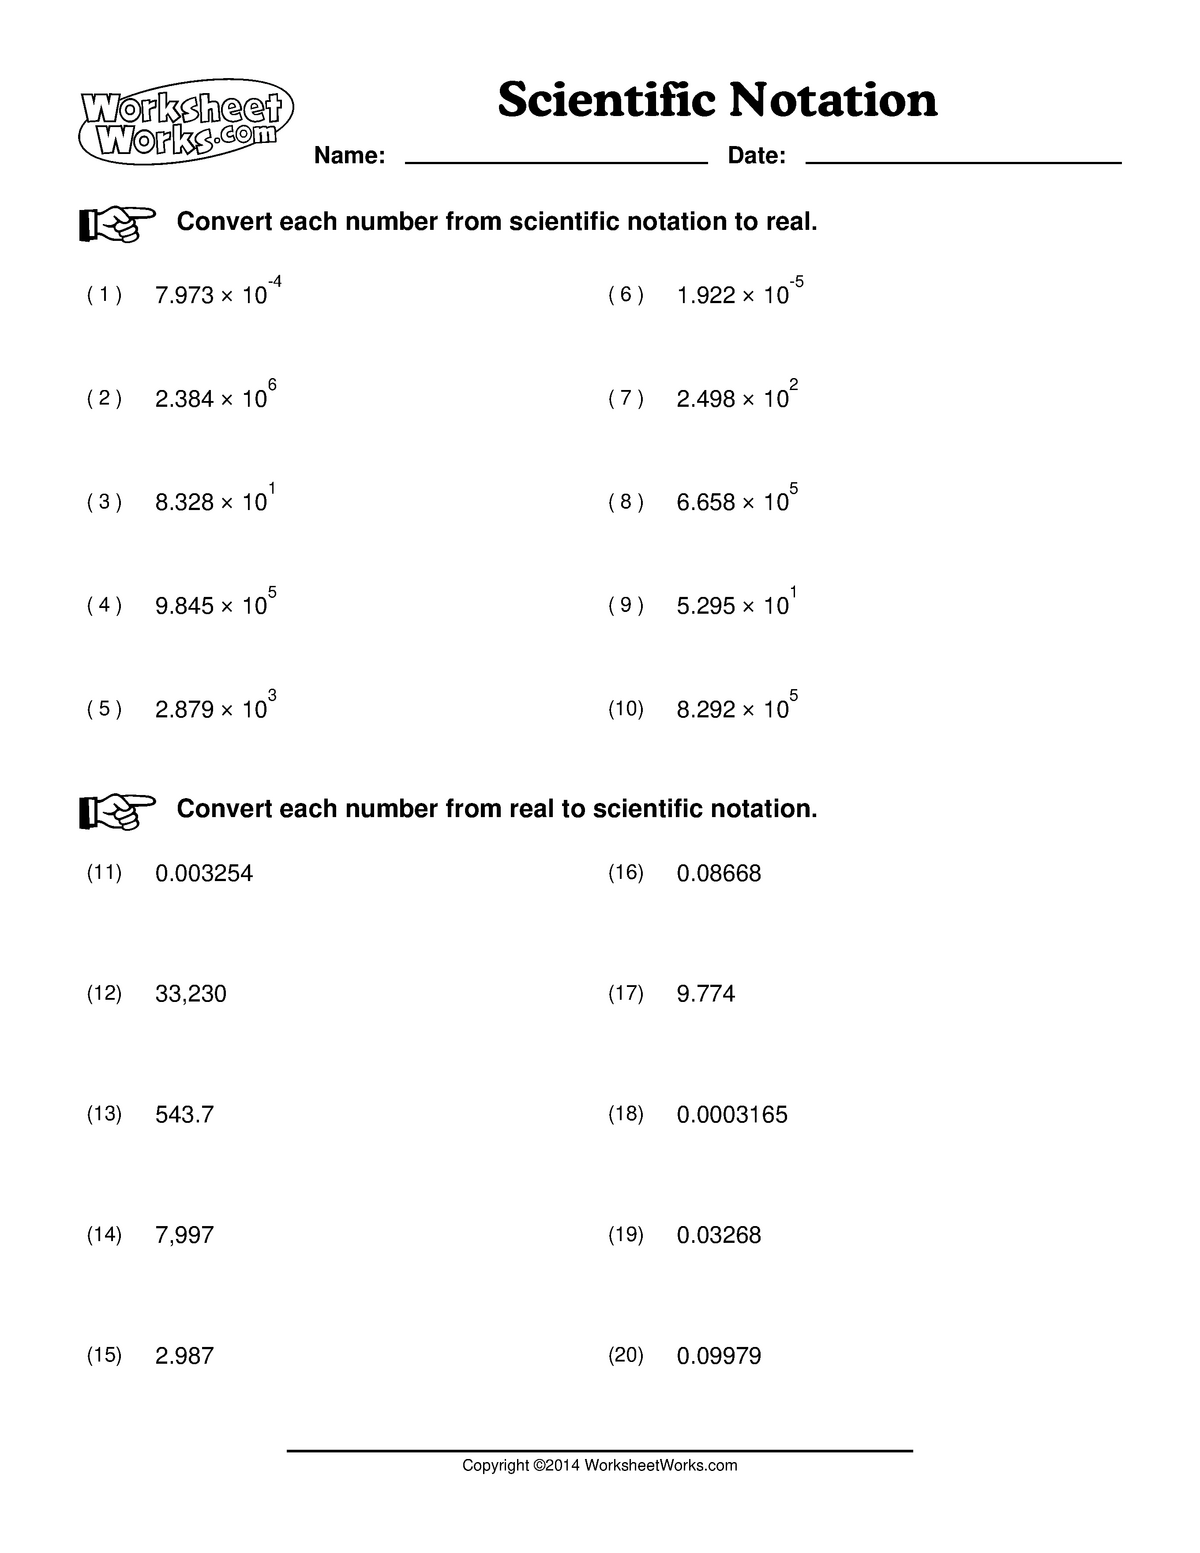 Scientific Notation Practice Problems - CHEM-CH20 - Chemistry Intended For Scientific Notation Practice Worksheet